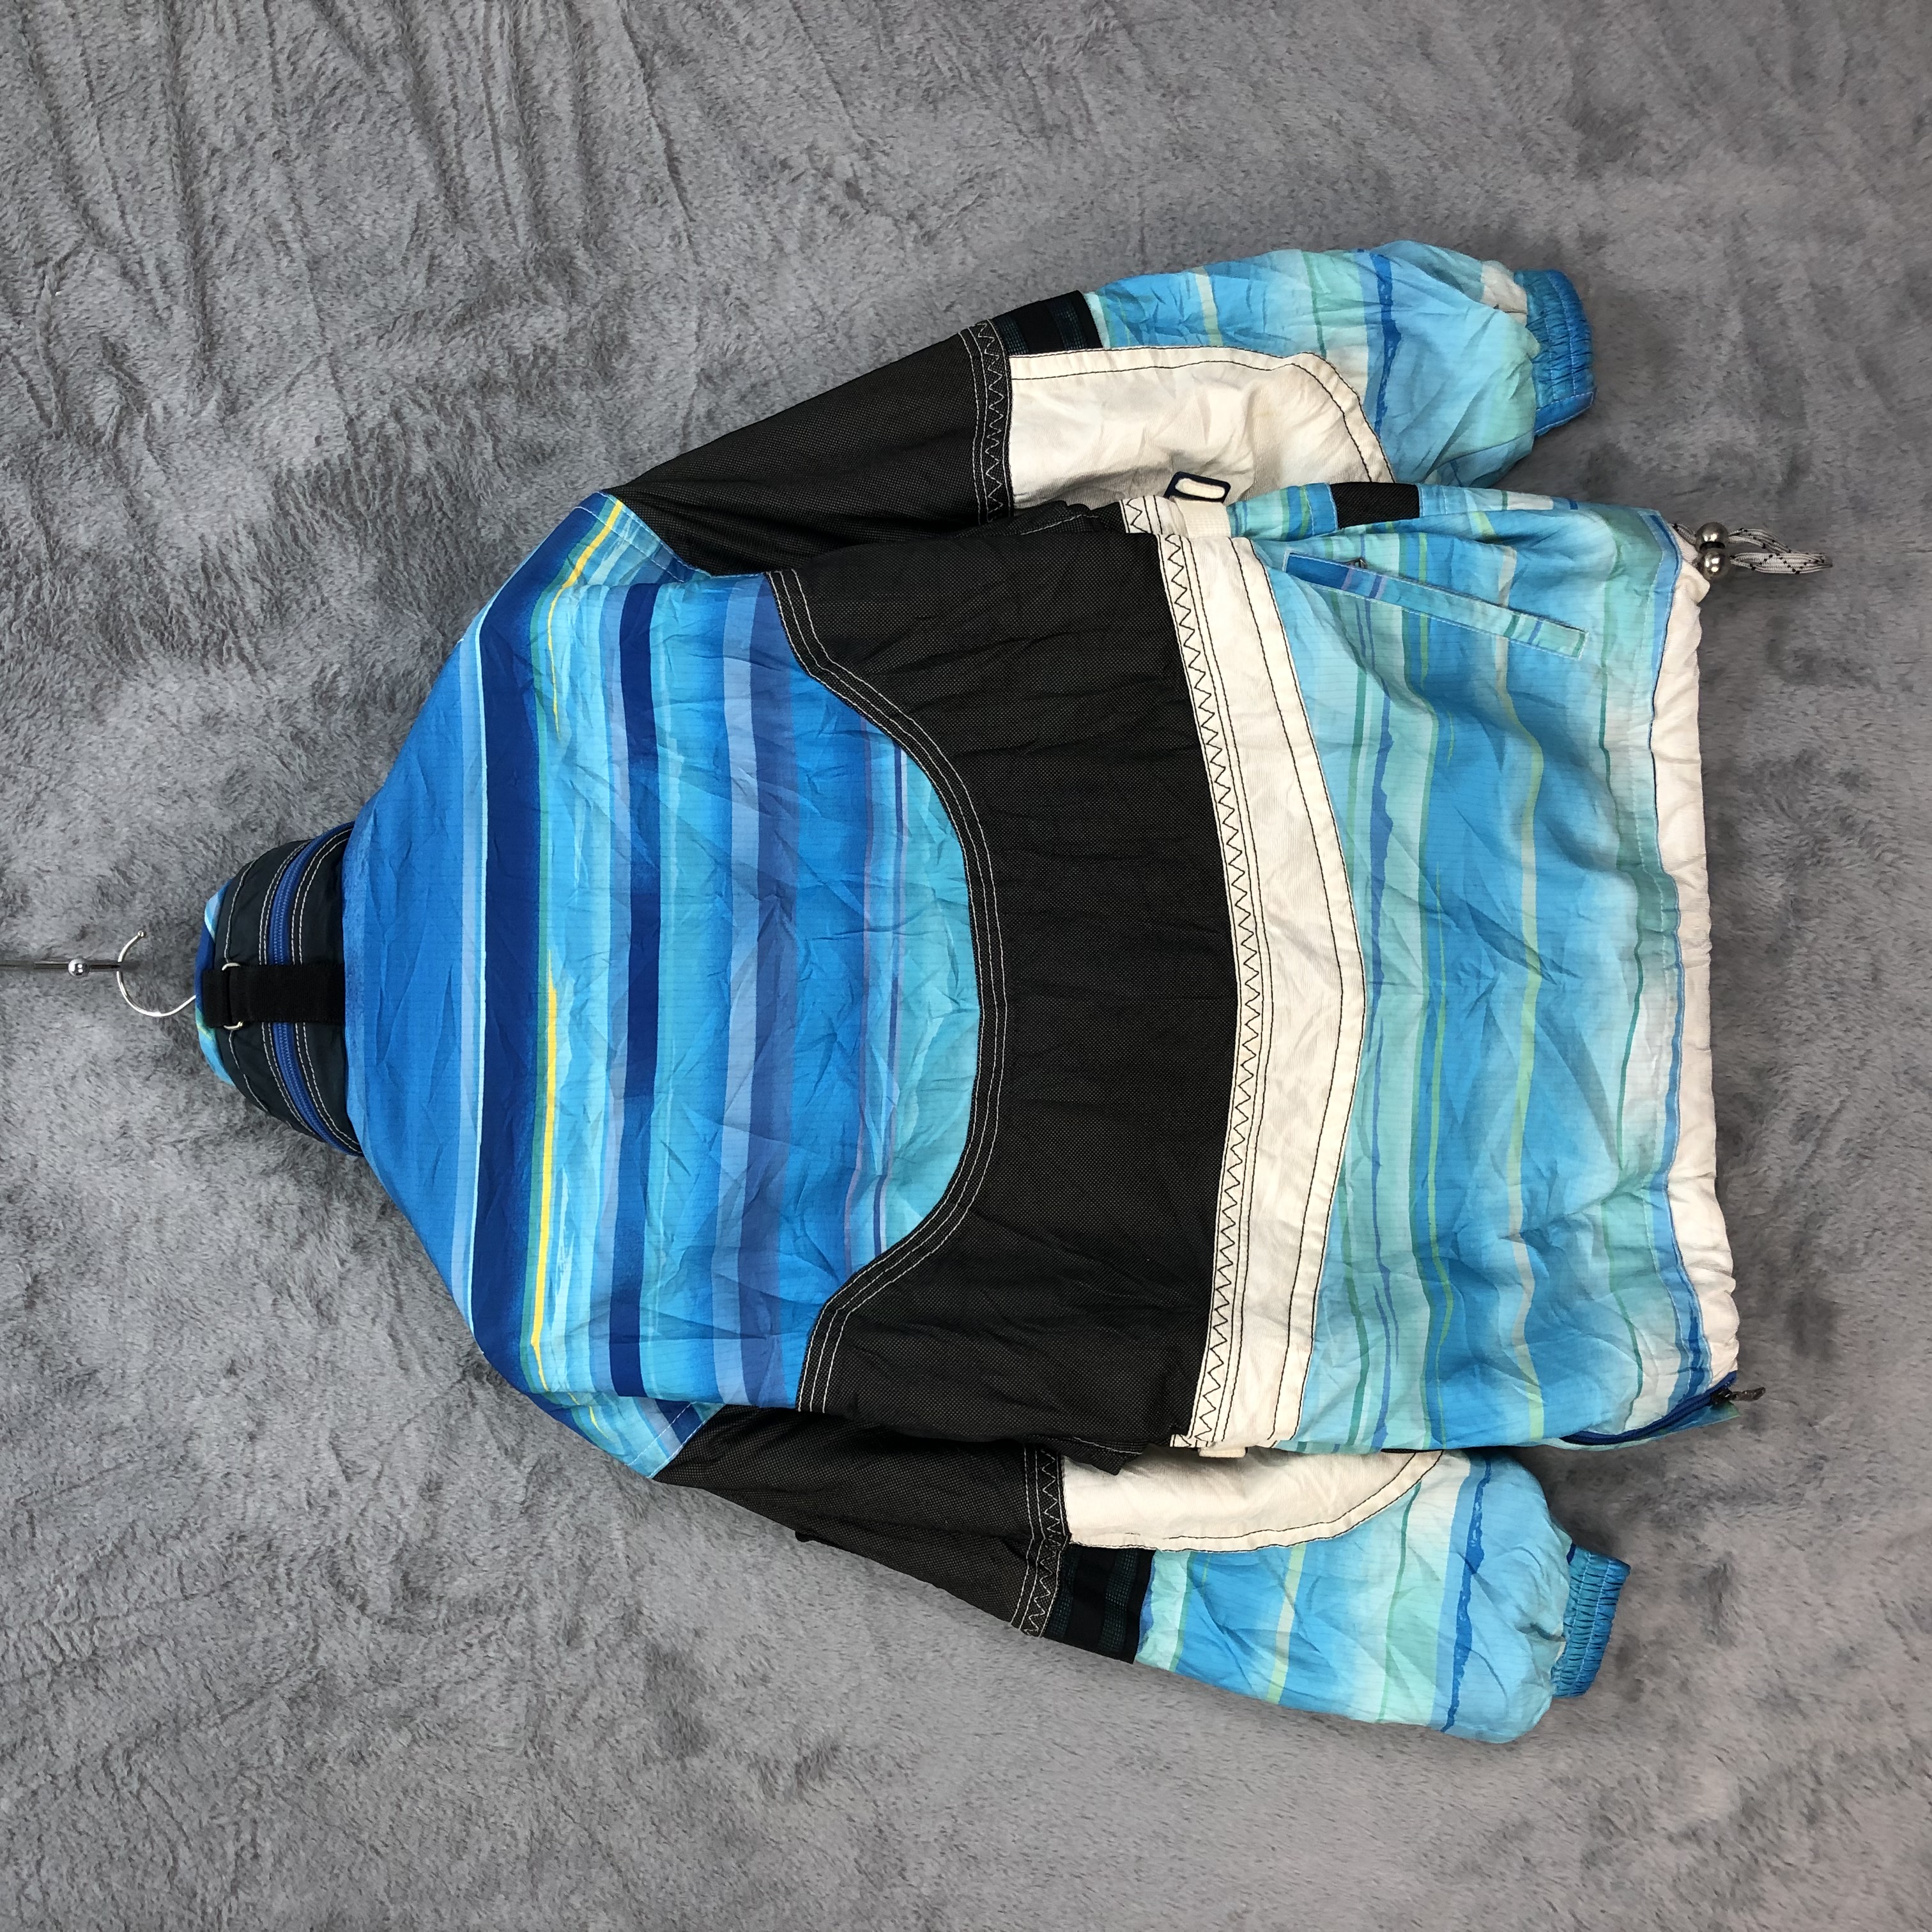 Salomon Optimal Movement Aqua Blue Ski Jacket #4748-167 - 12